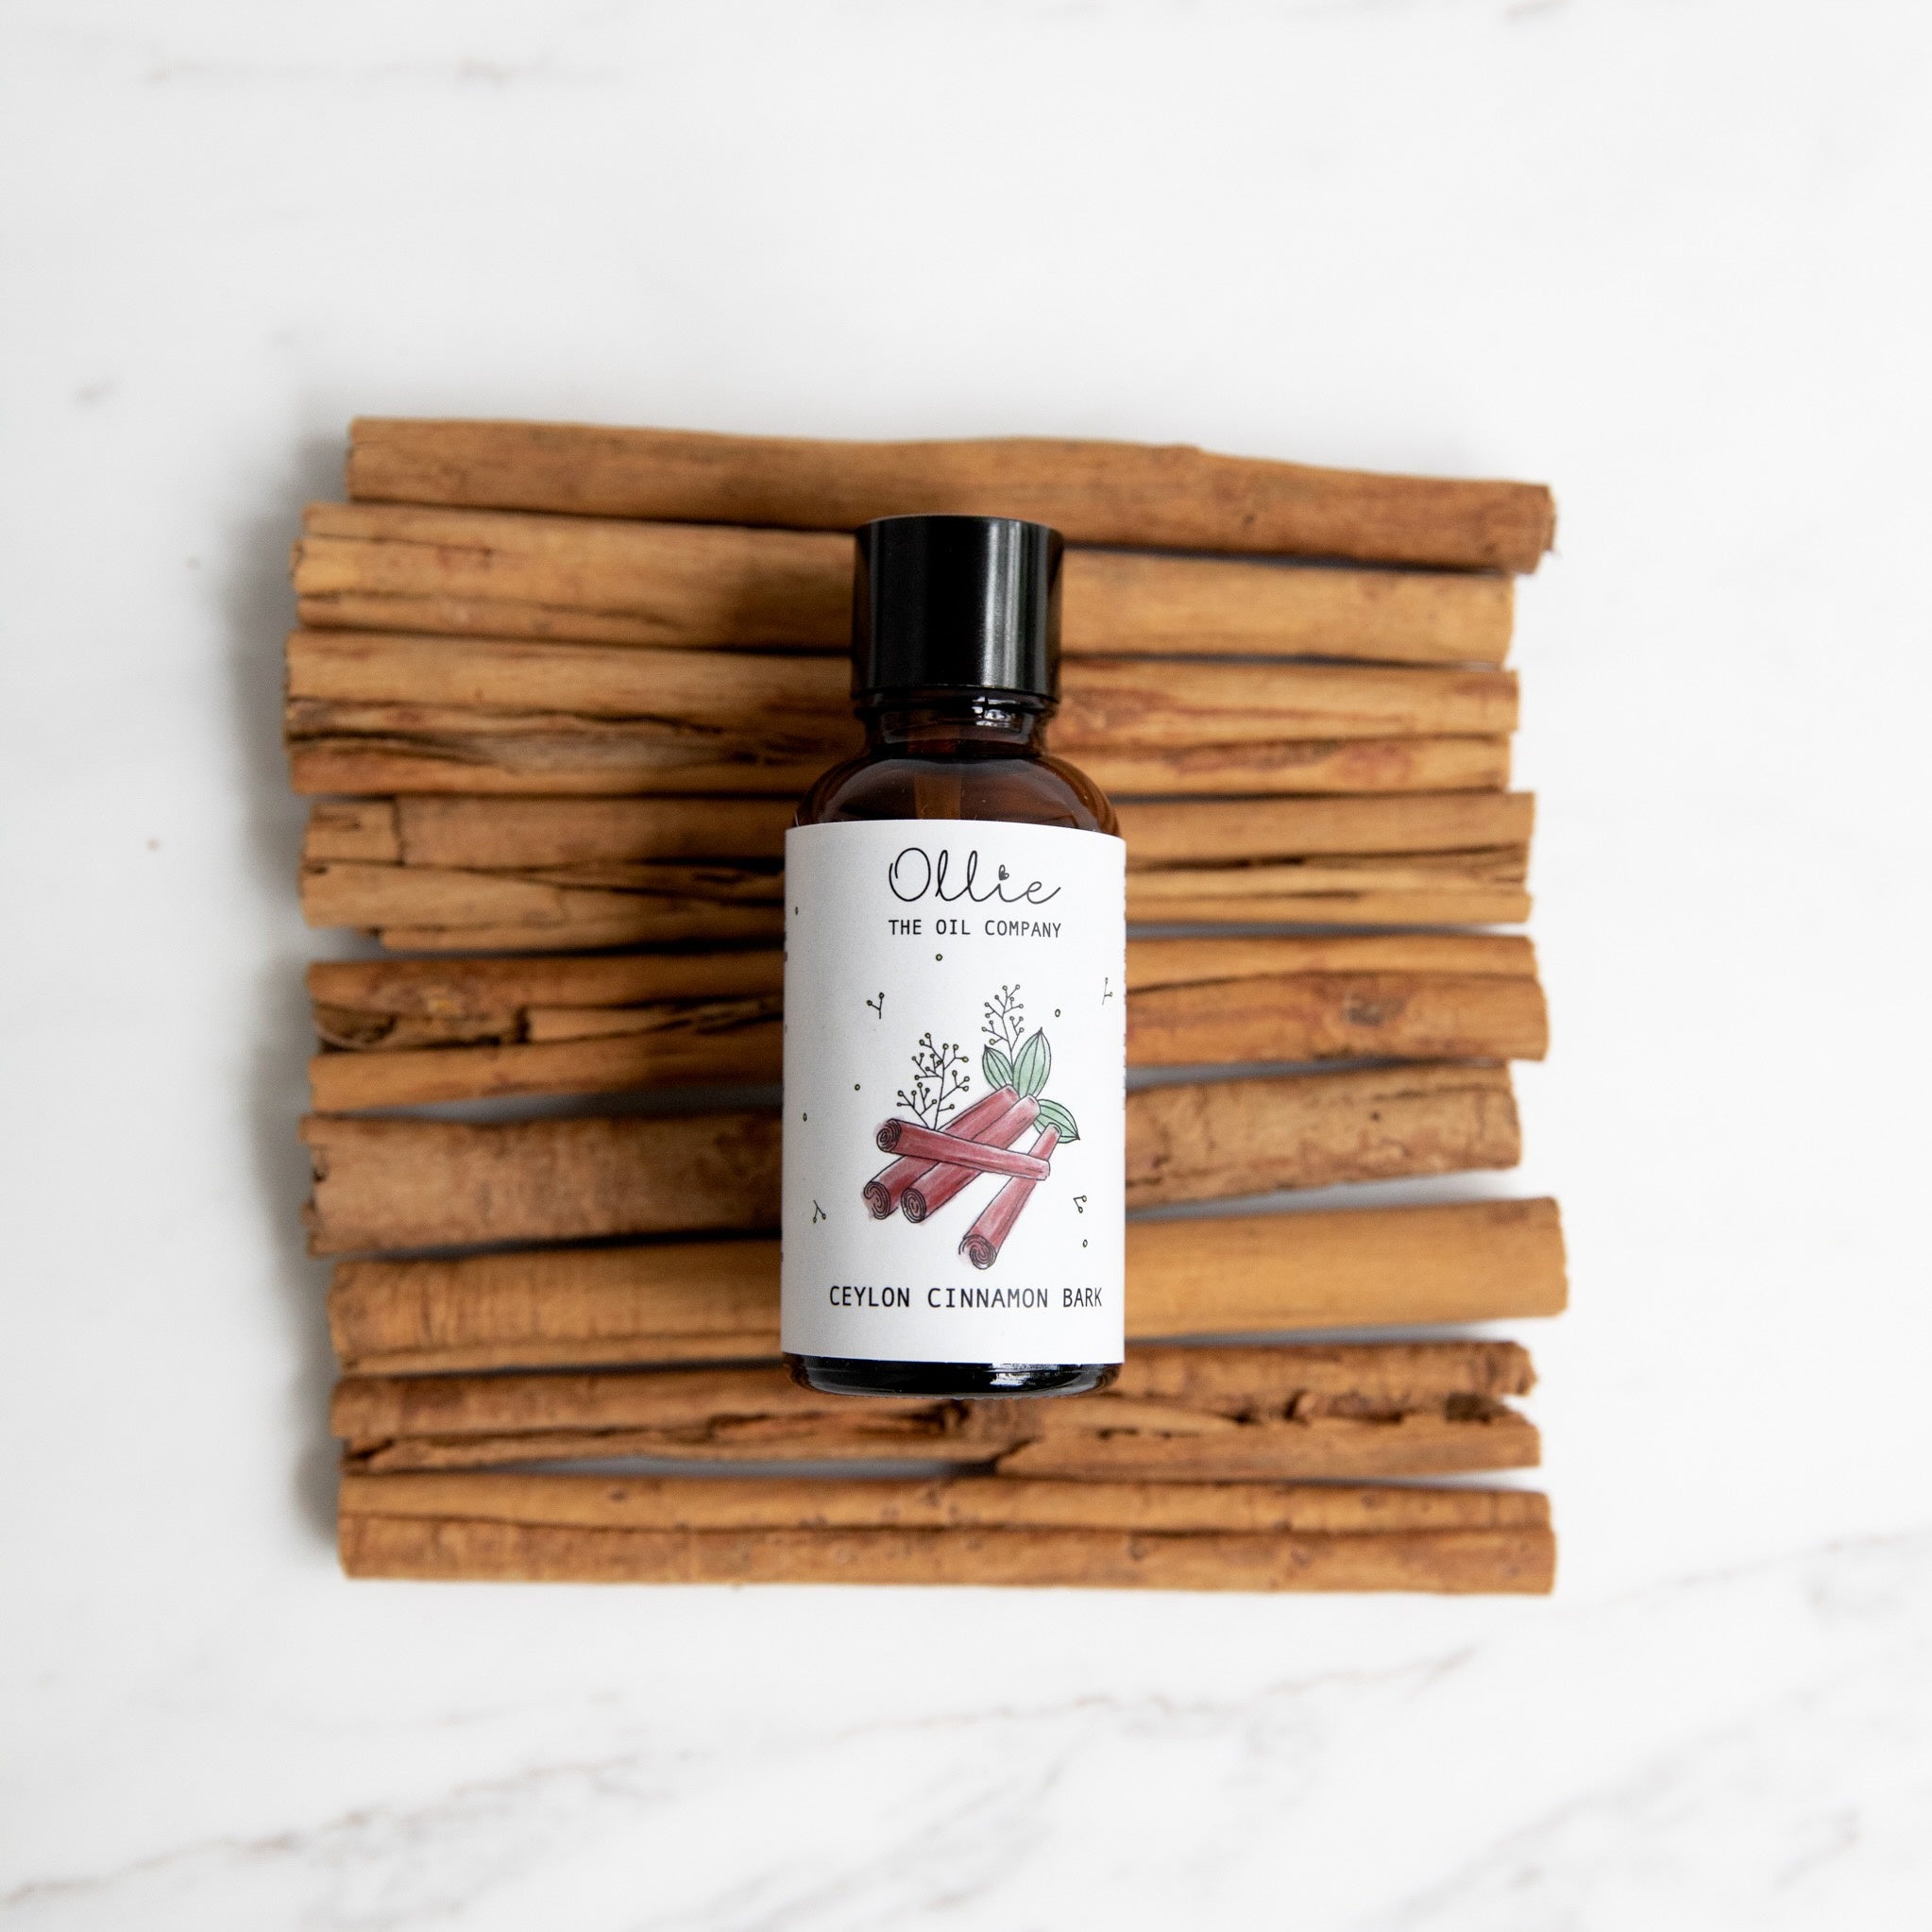 Ollie Ceylon Cinnamon Bark Oil